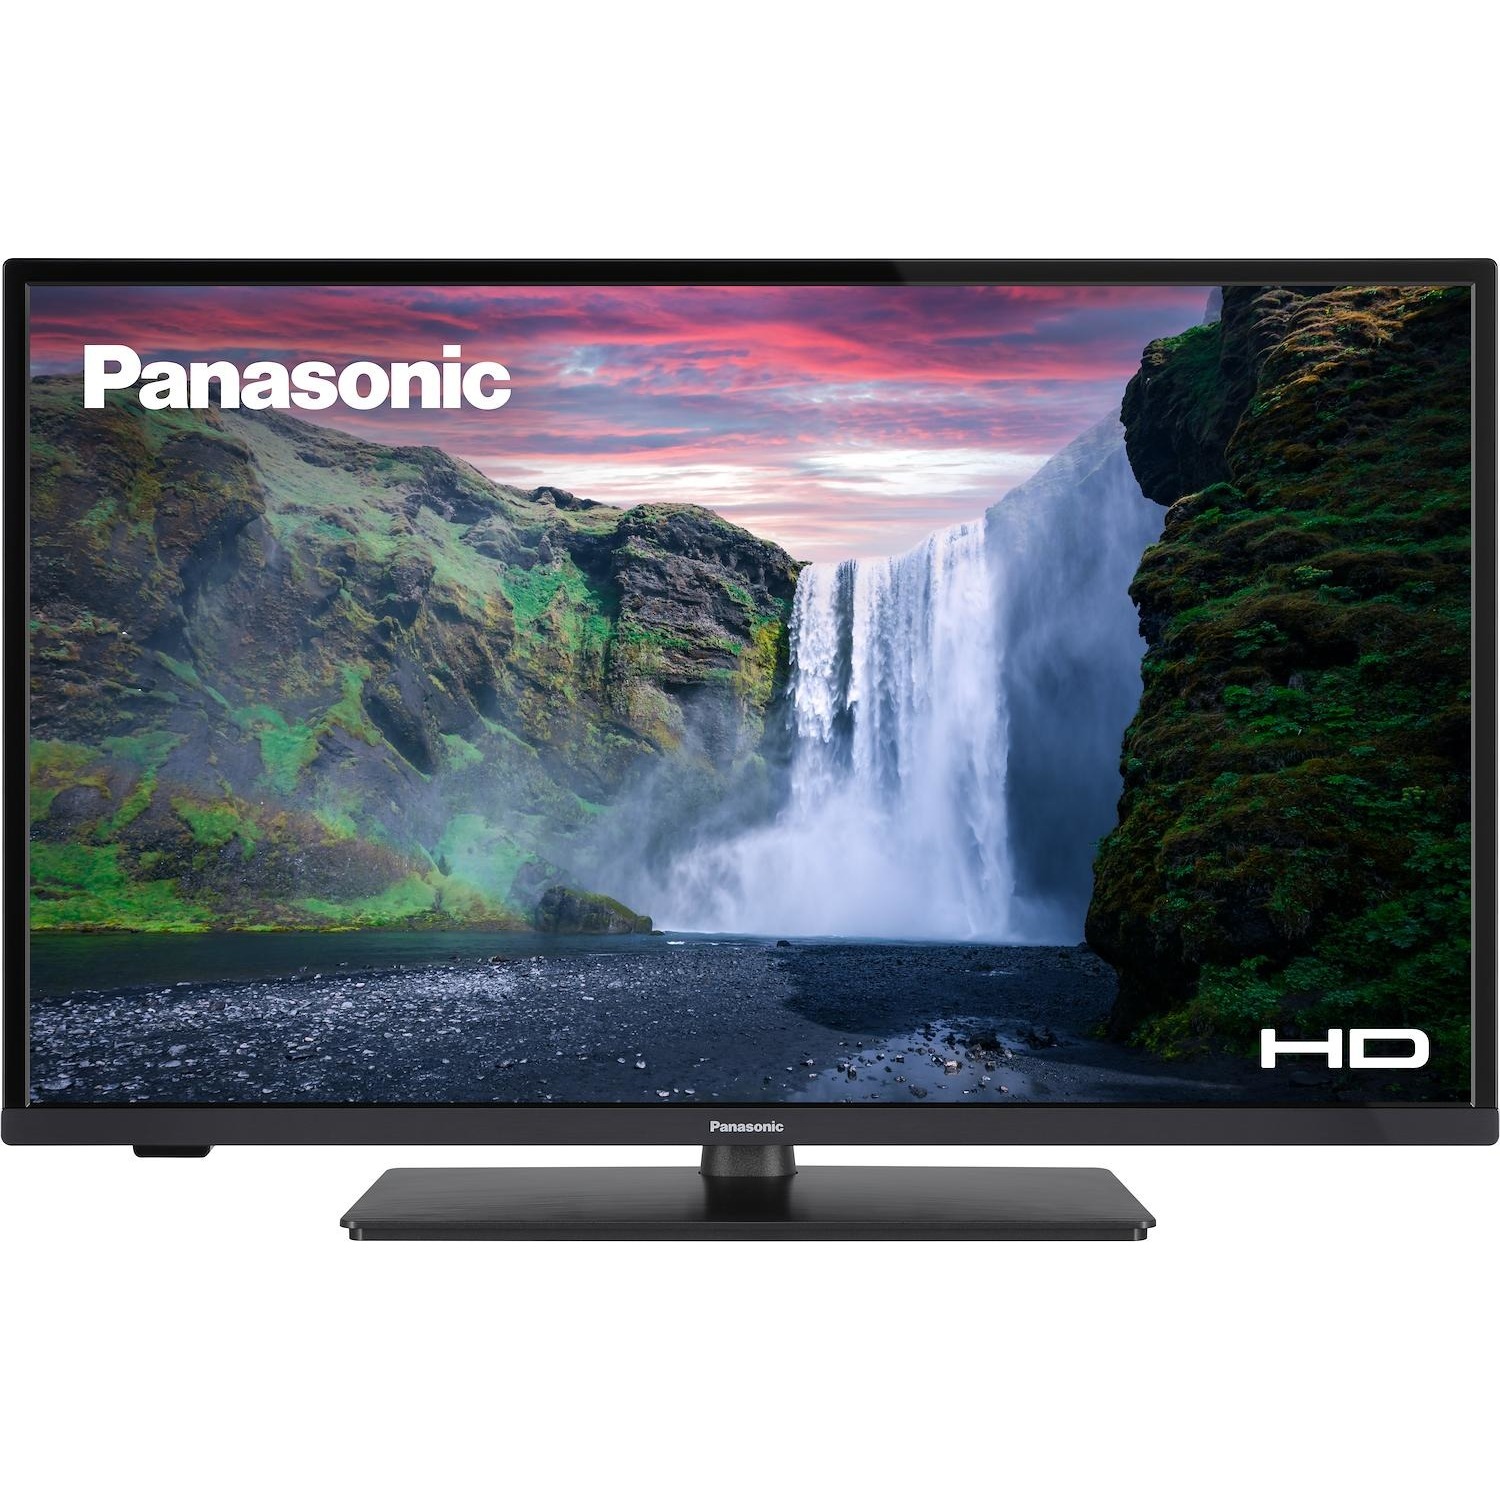 Immagine per TV LED Smart Panasonic 32LS480 da DIMOStore